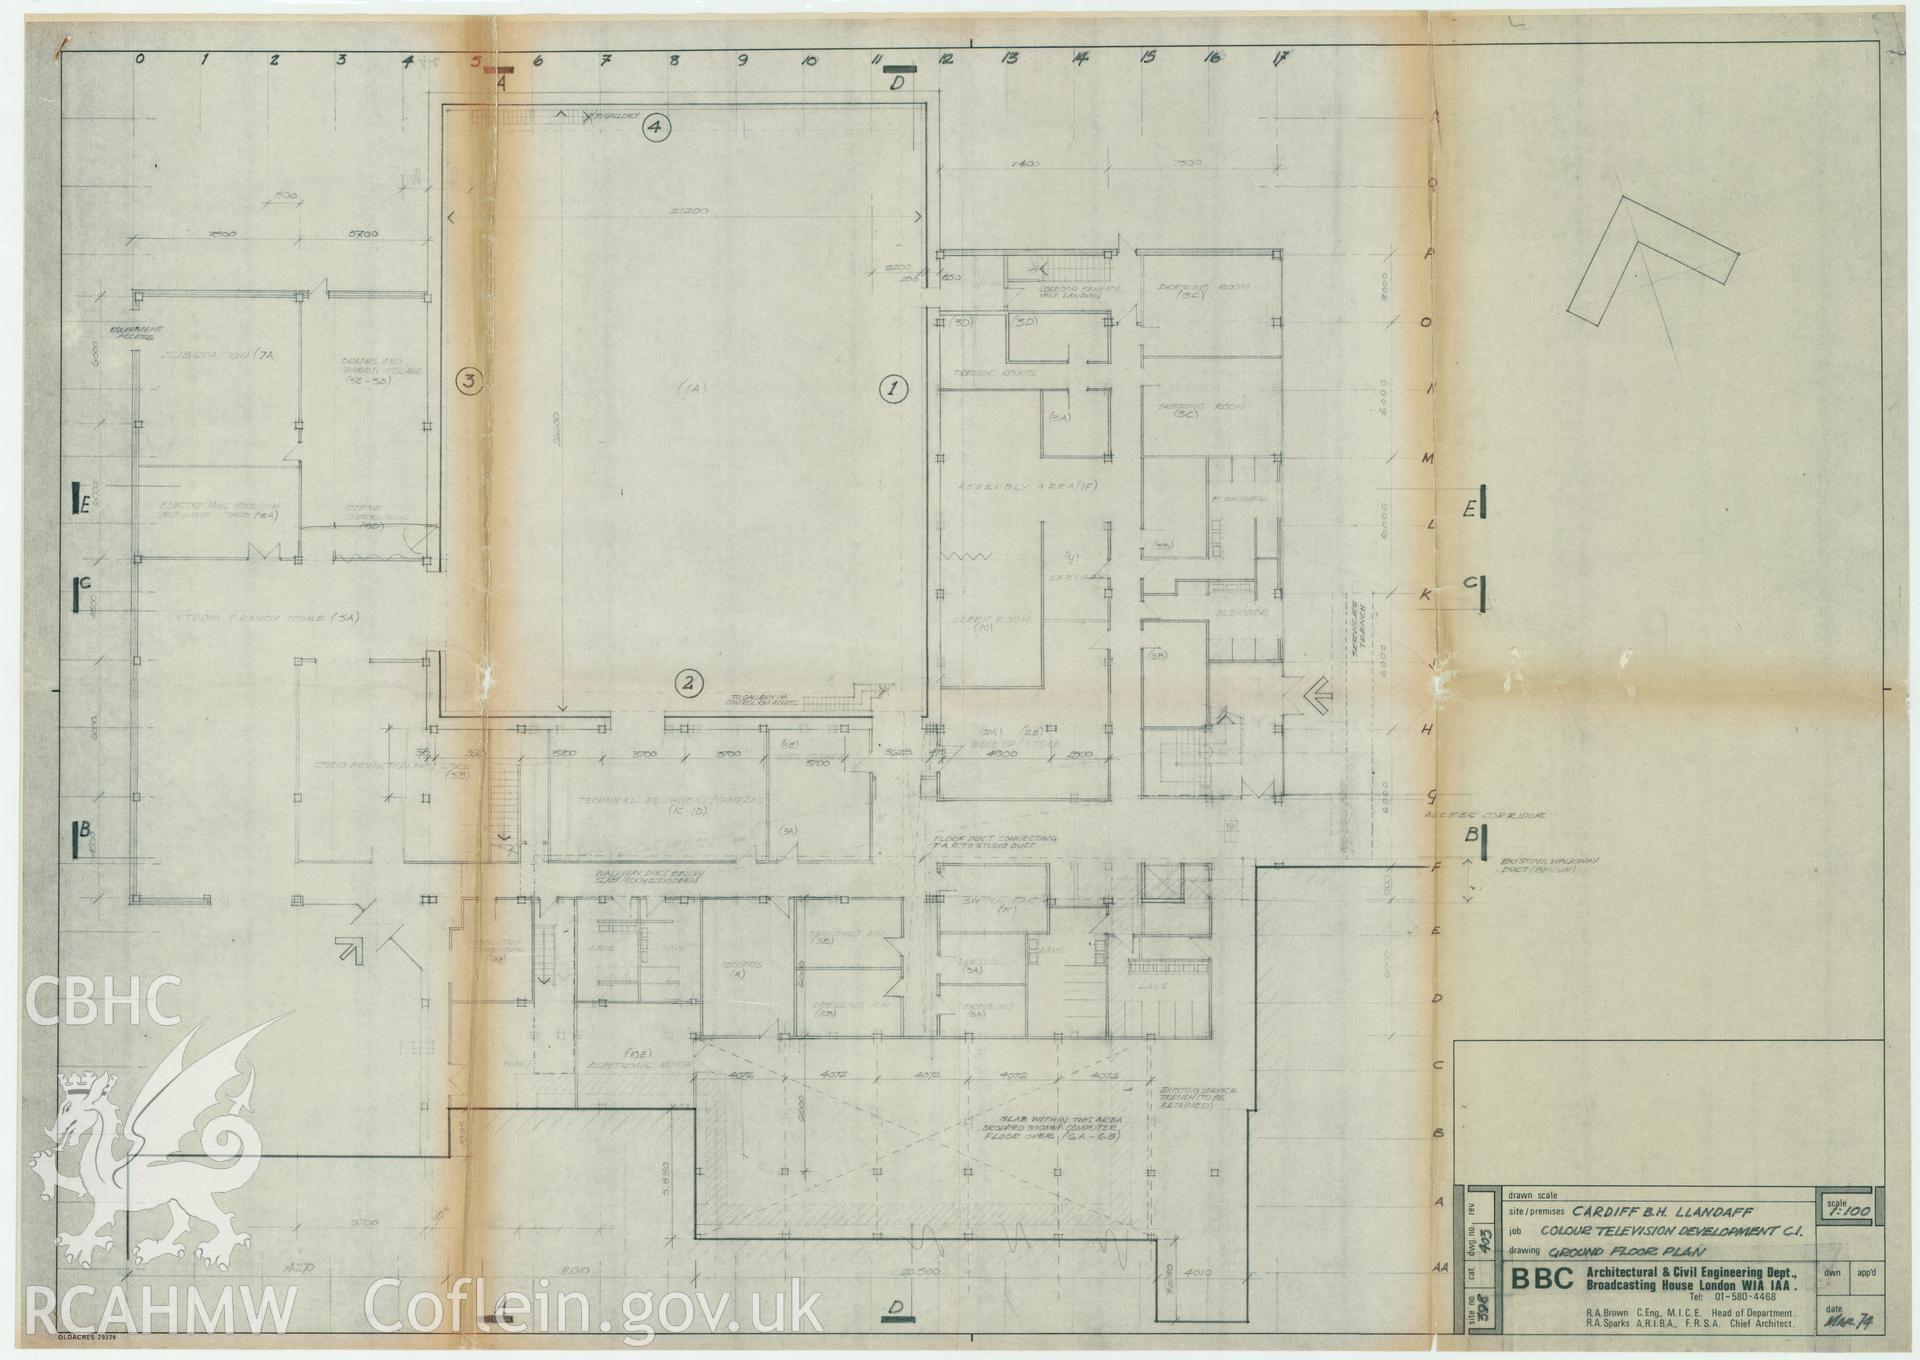 Digitised drawing plan of Llandaff production studio C1- Colour TV development. Ground floor plan. Drawing no. 403, March 1974.